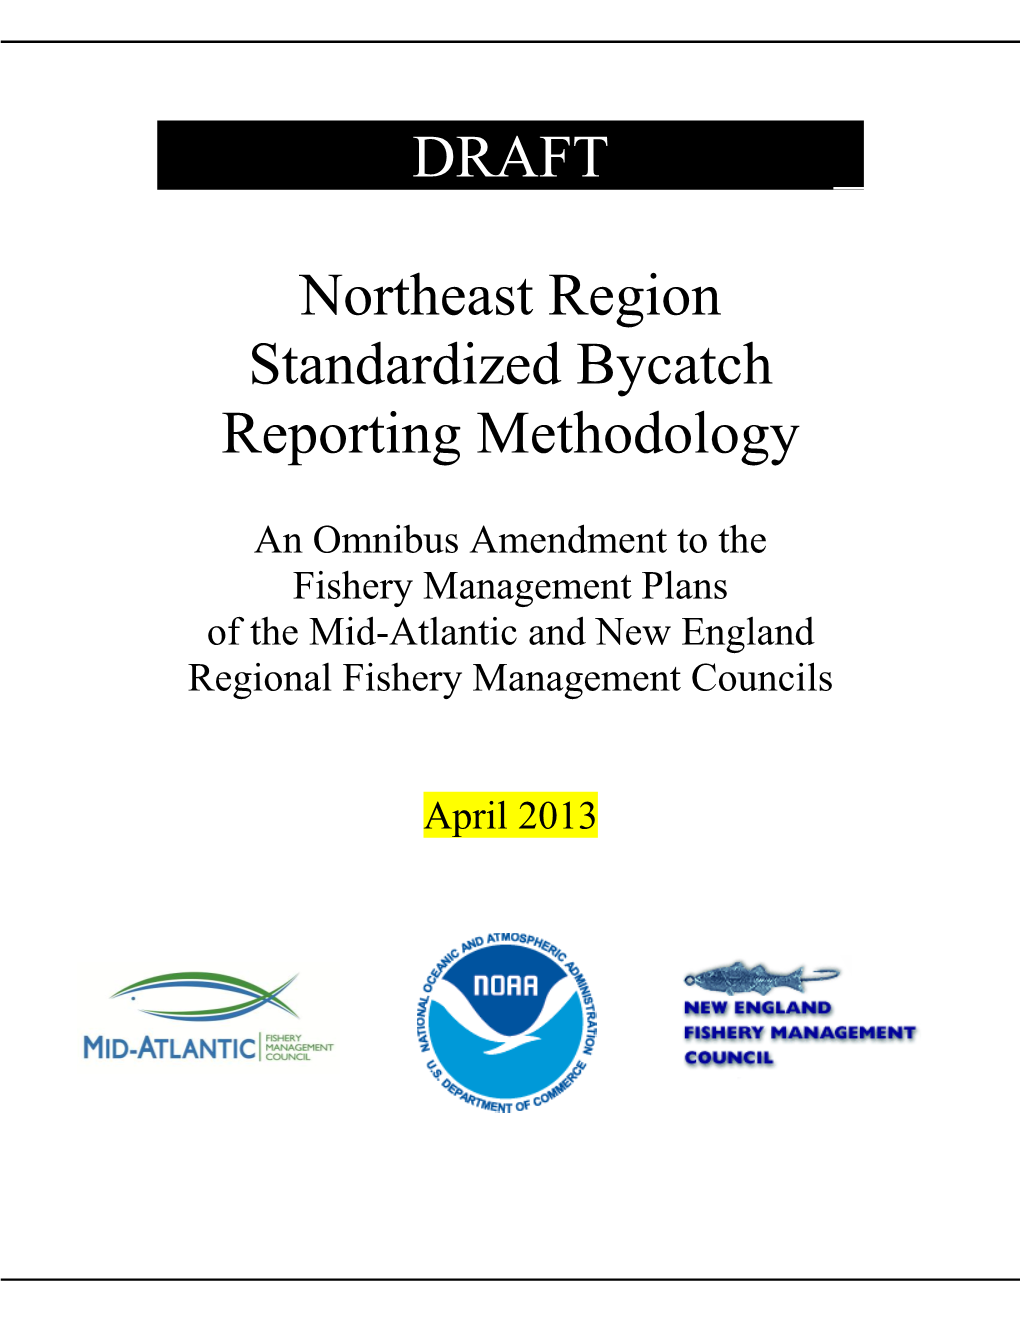 Standardized Bycatch Reporting Methodology (SBRM)